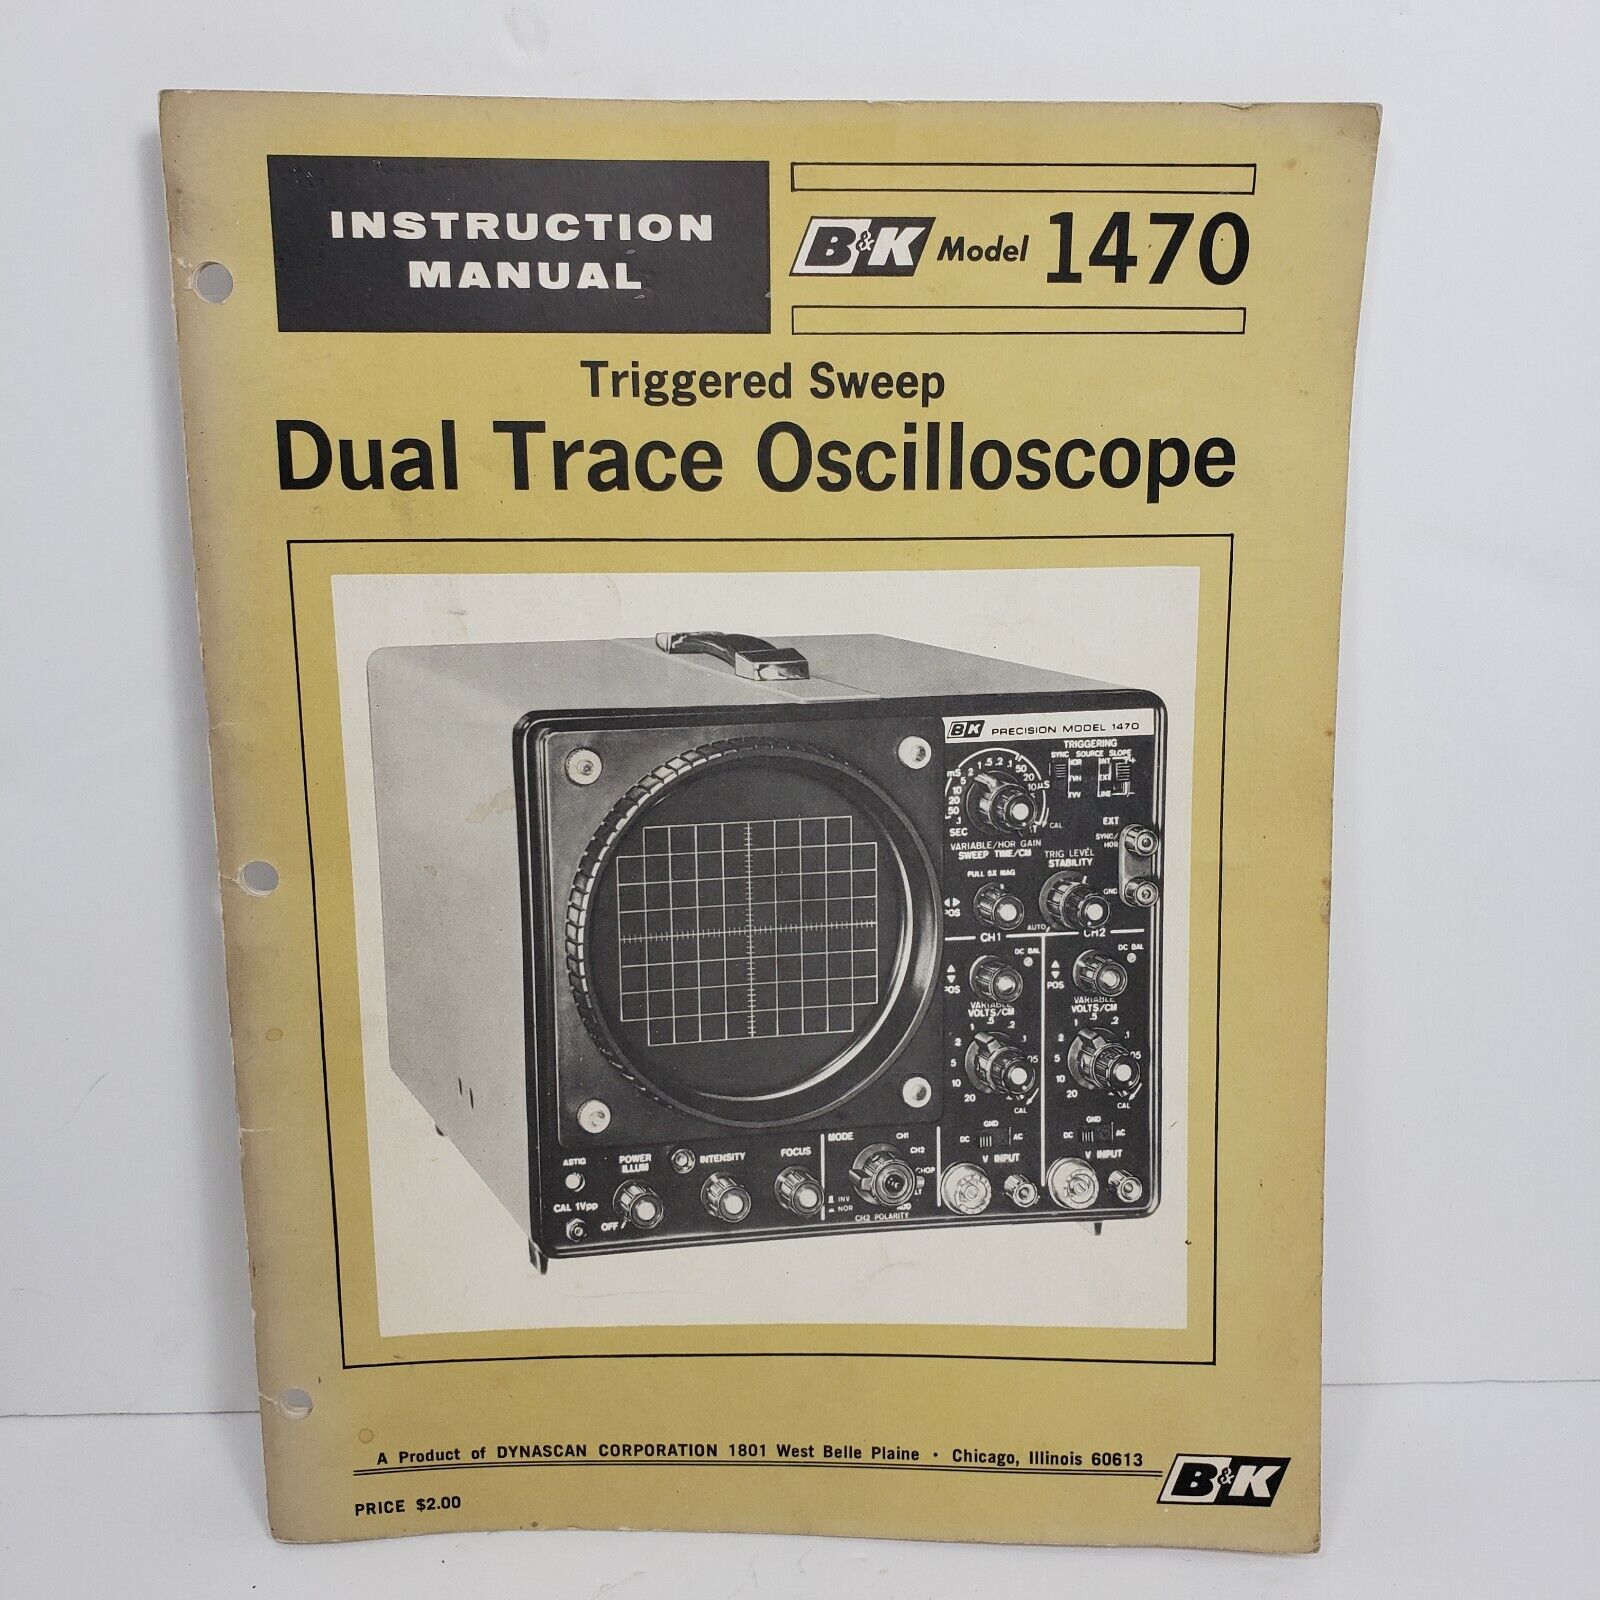 B&K Triggered Sweep Dual Trace Oscilloscope Instruction Manual Model 1470 VTG 